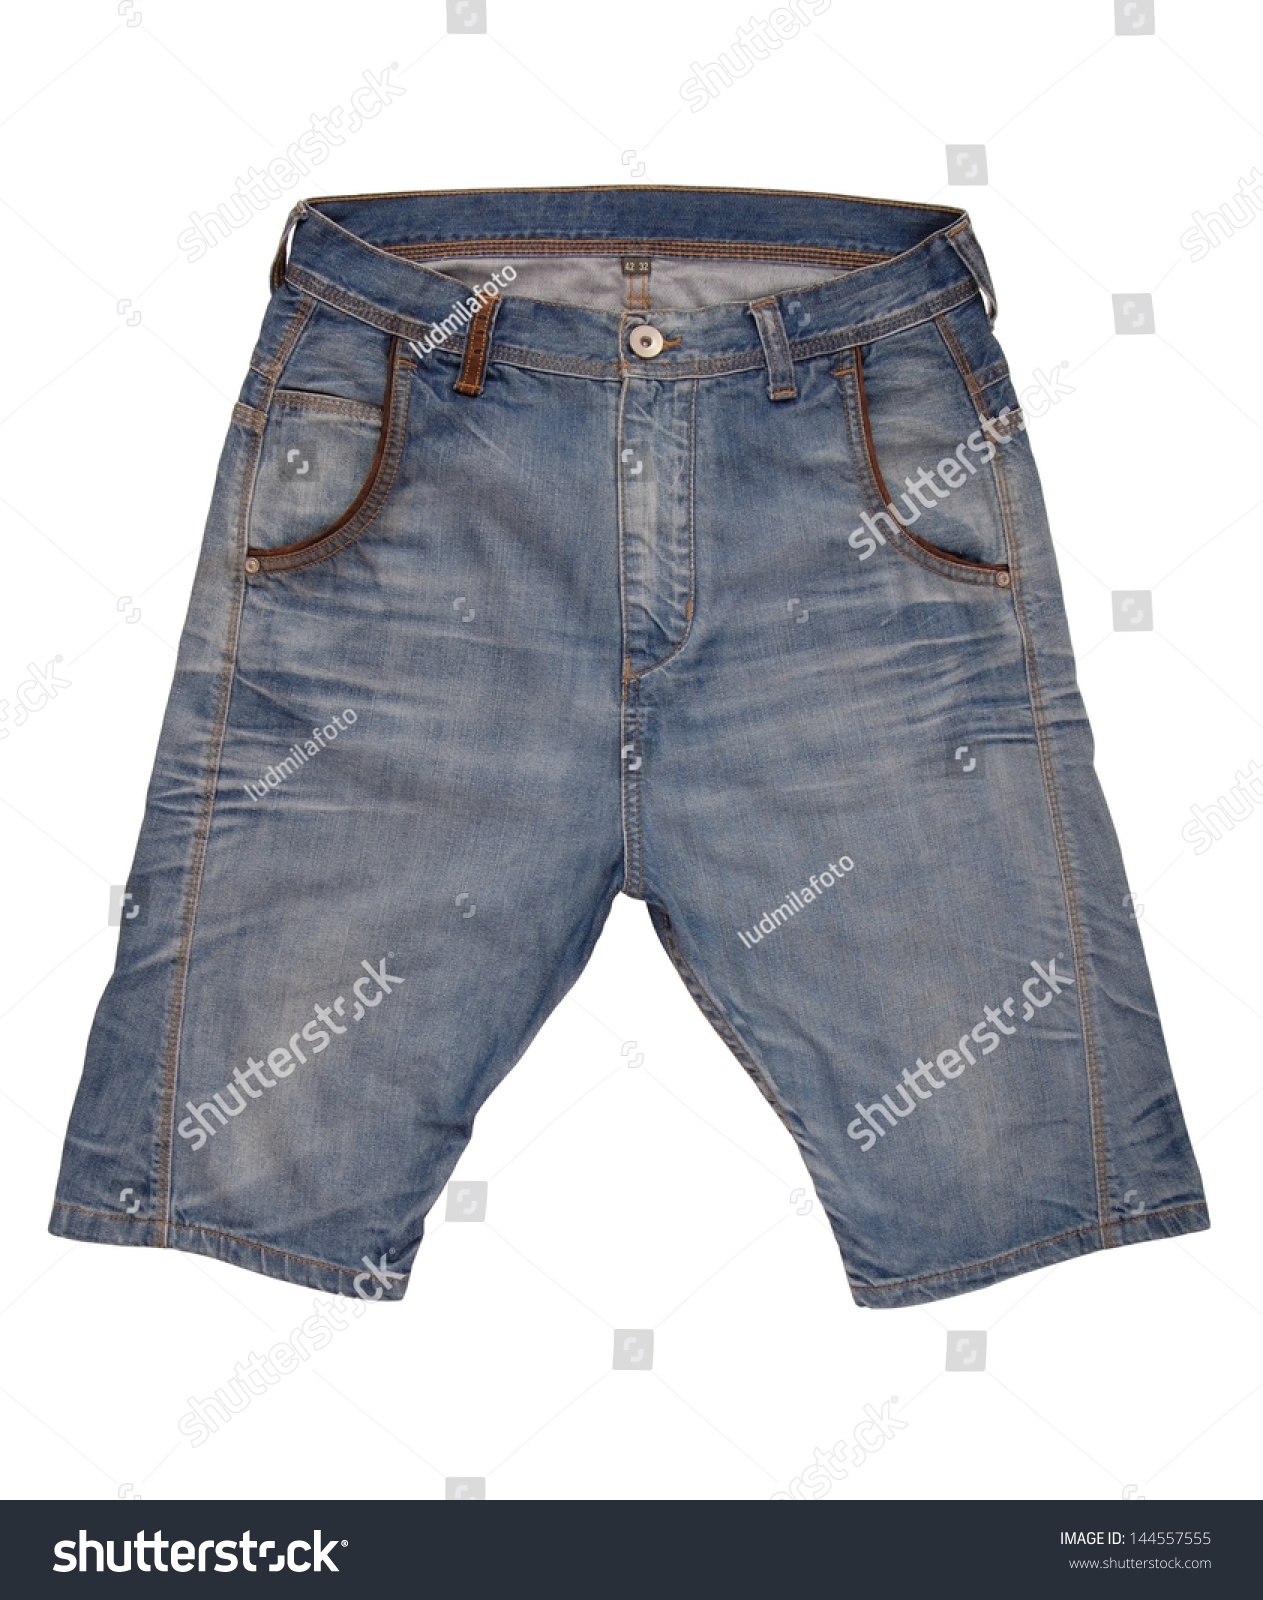 Denim Shorts Are On White Background. Stock Photo 144557555 : Shutterstock